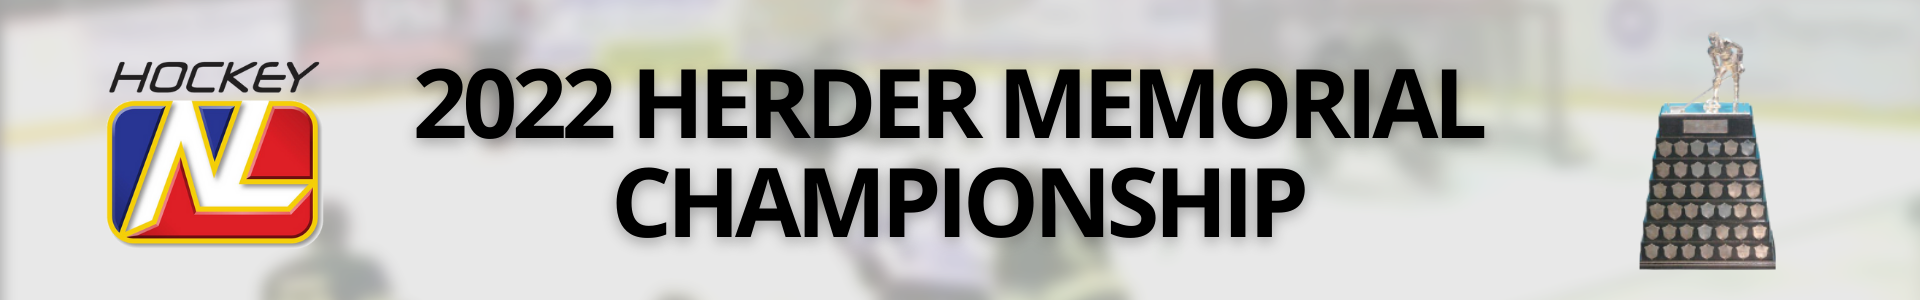 Herder Memorial Championship